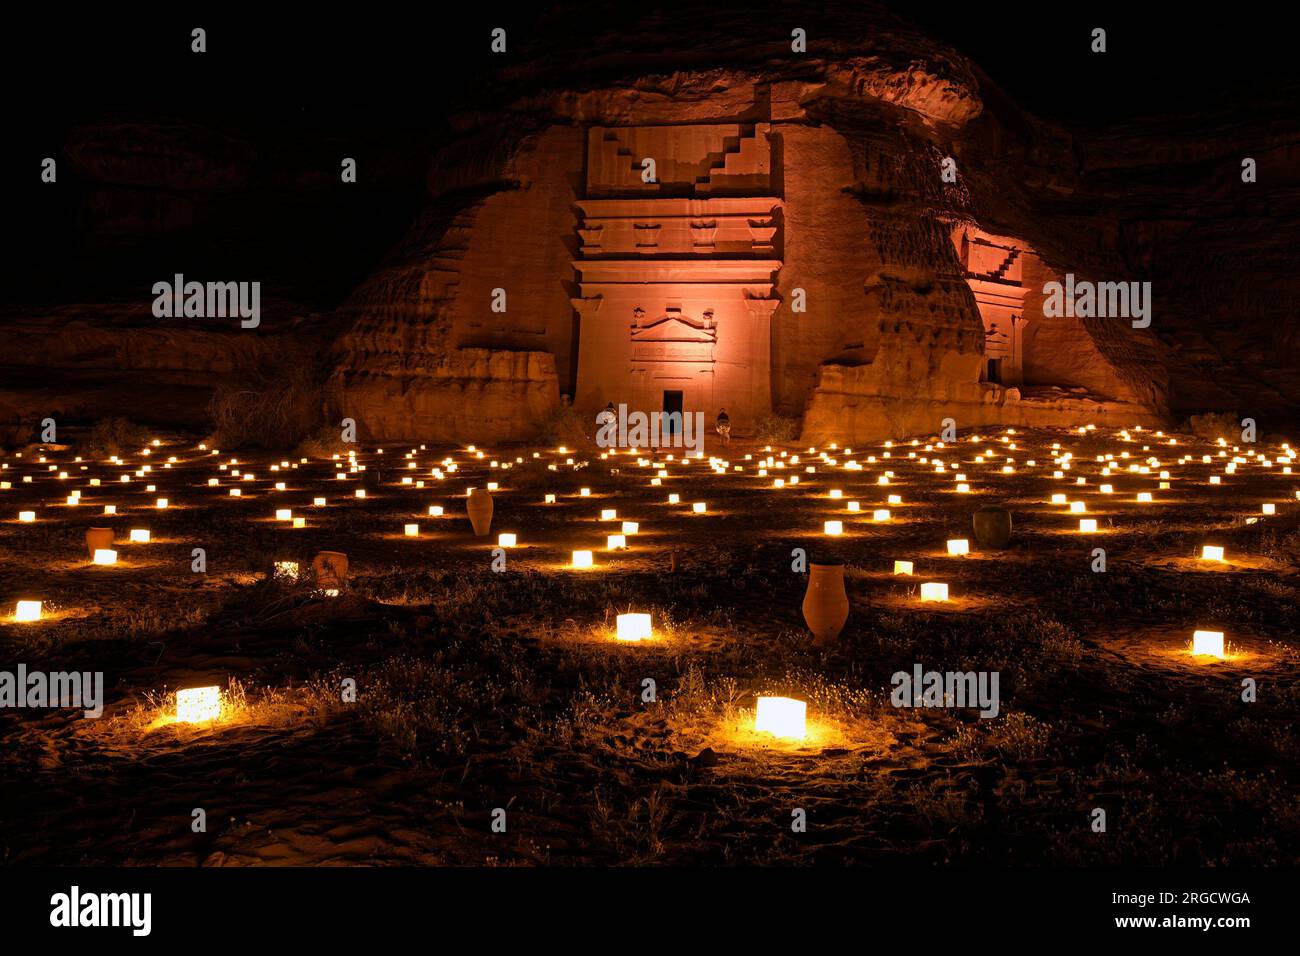 Hegra ancient tombs illuminated by candle light, Alula, Saudi Arabia Stock Photo